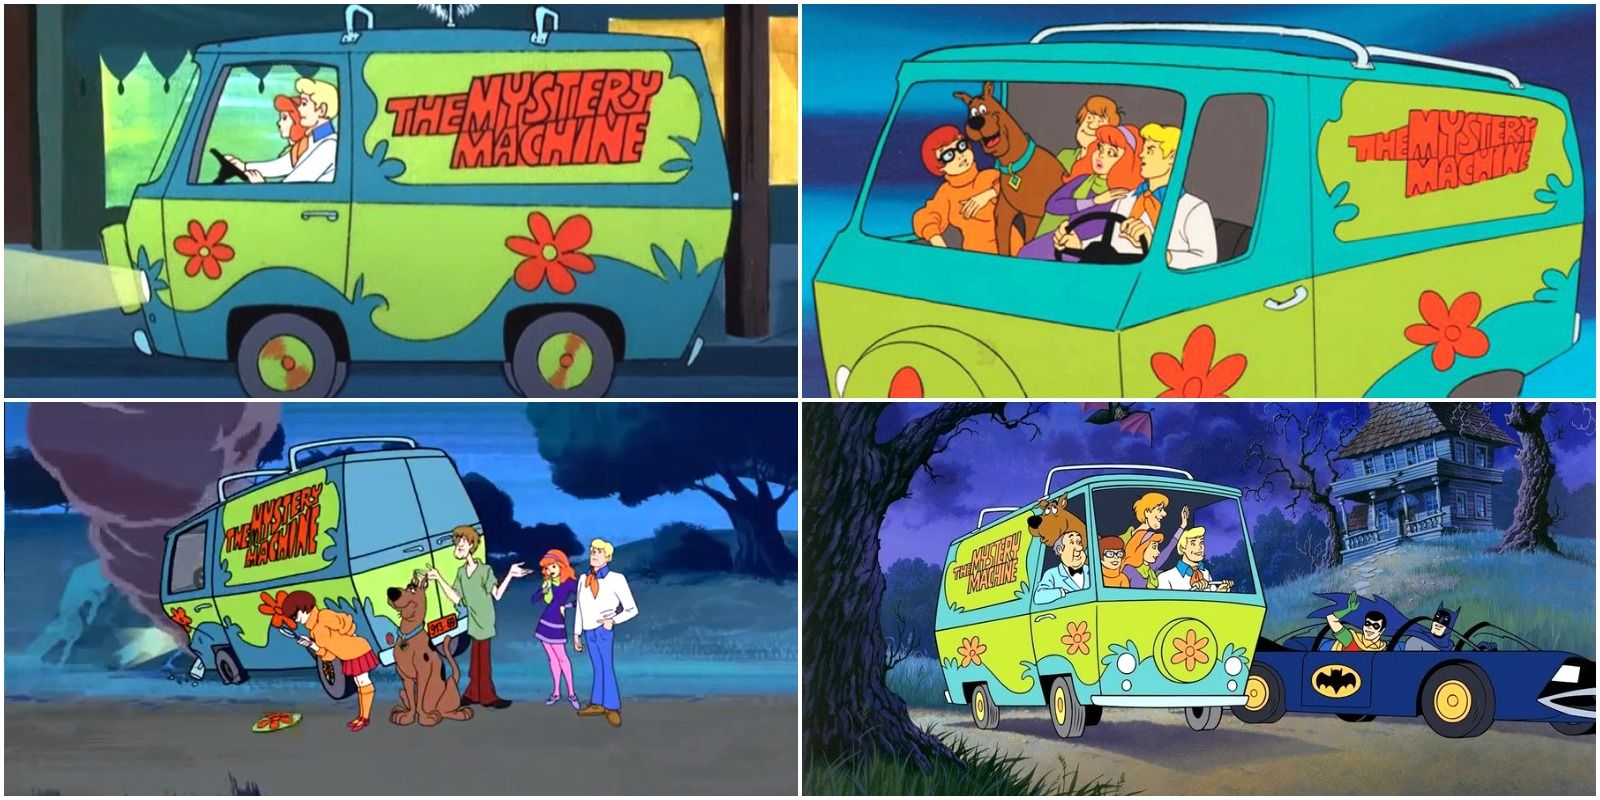 The original Mystery Machine from the original Scooby Doo Show